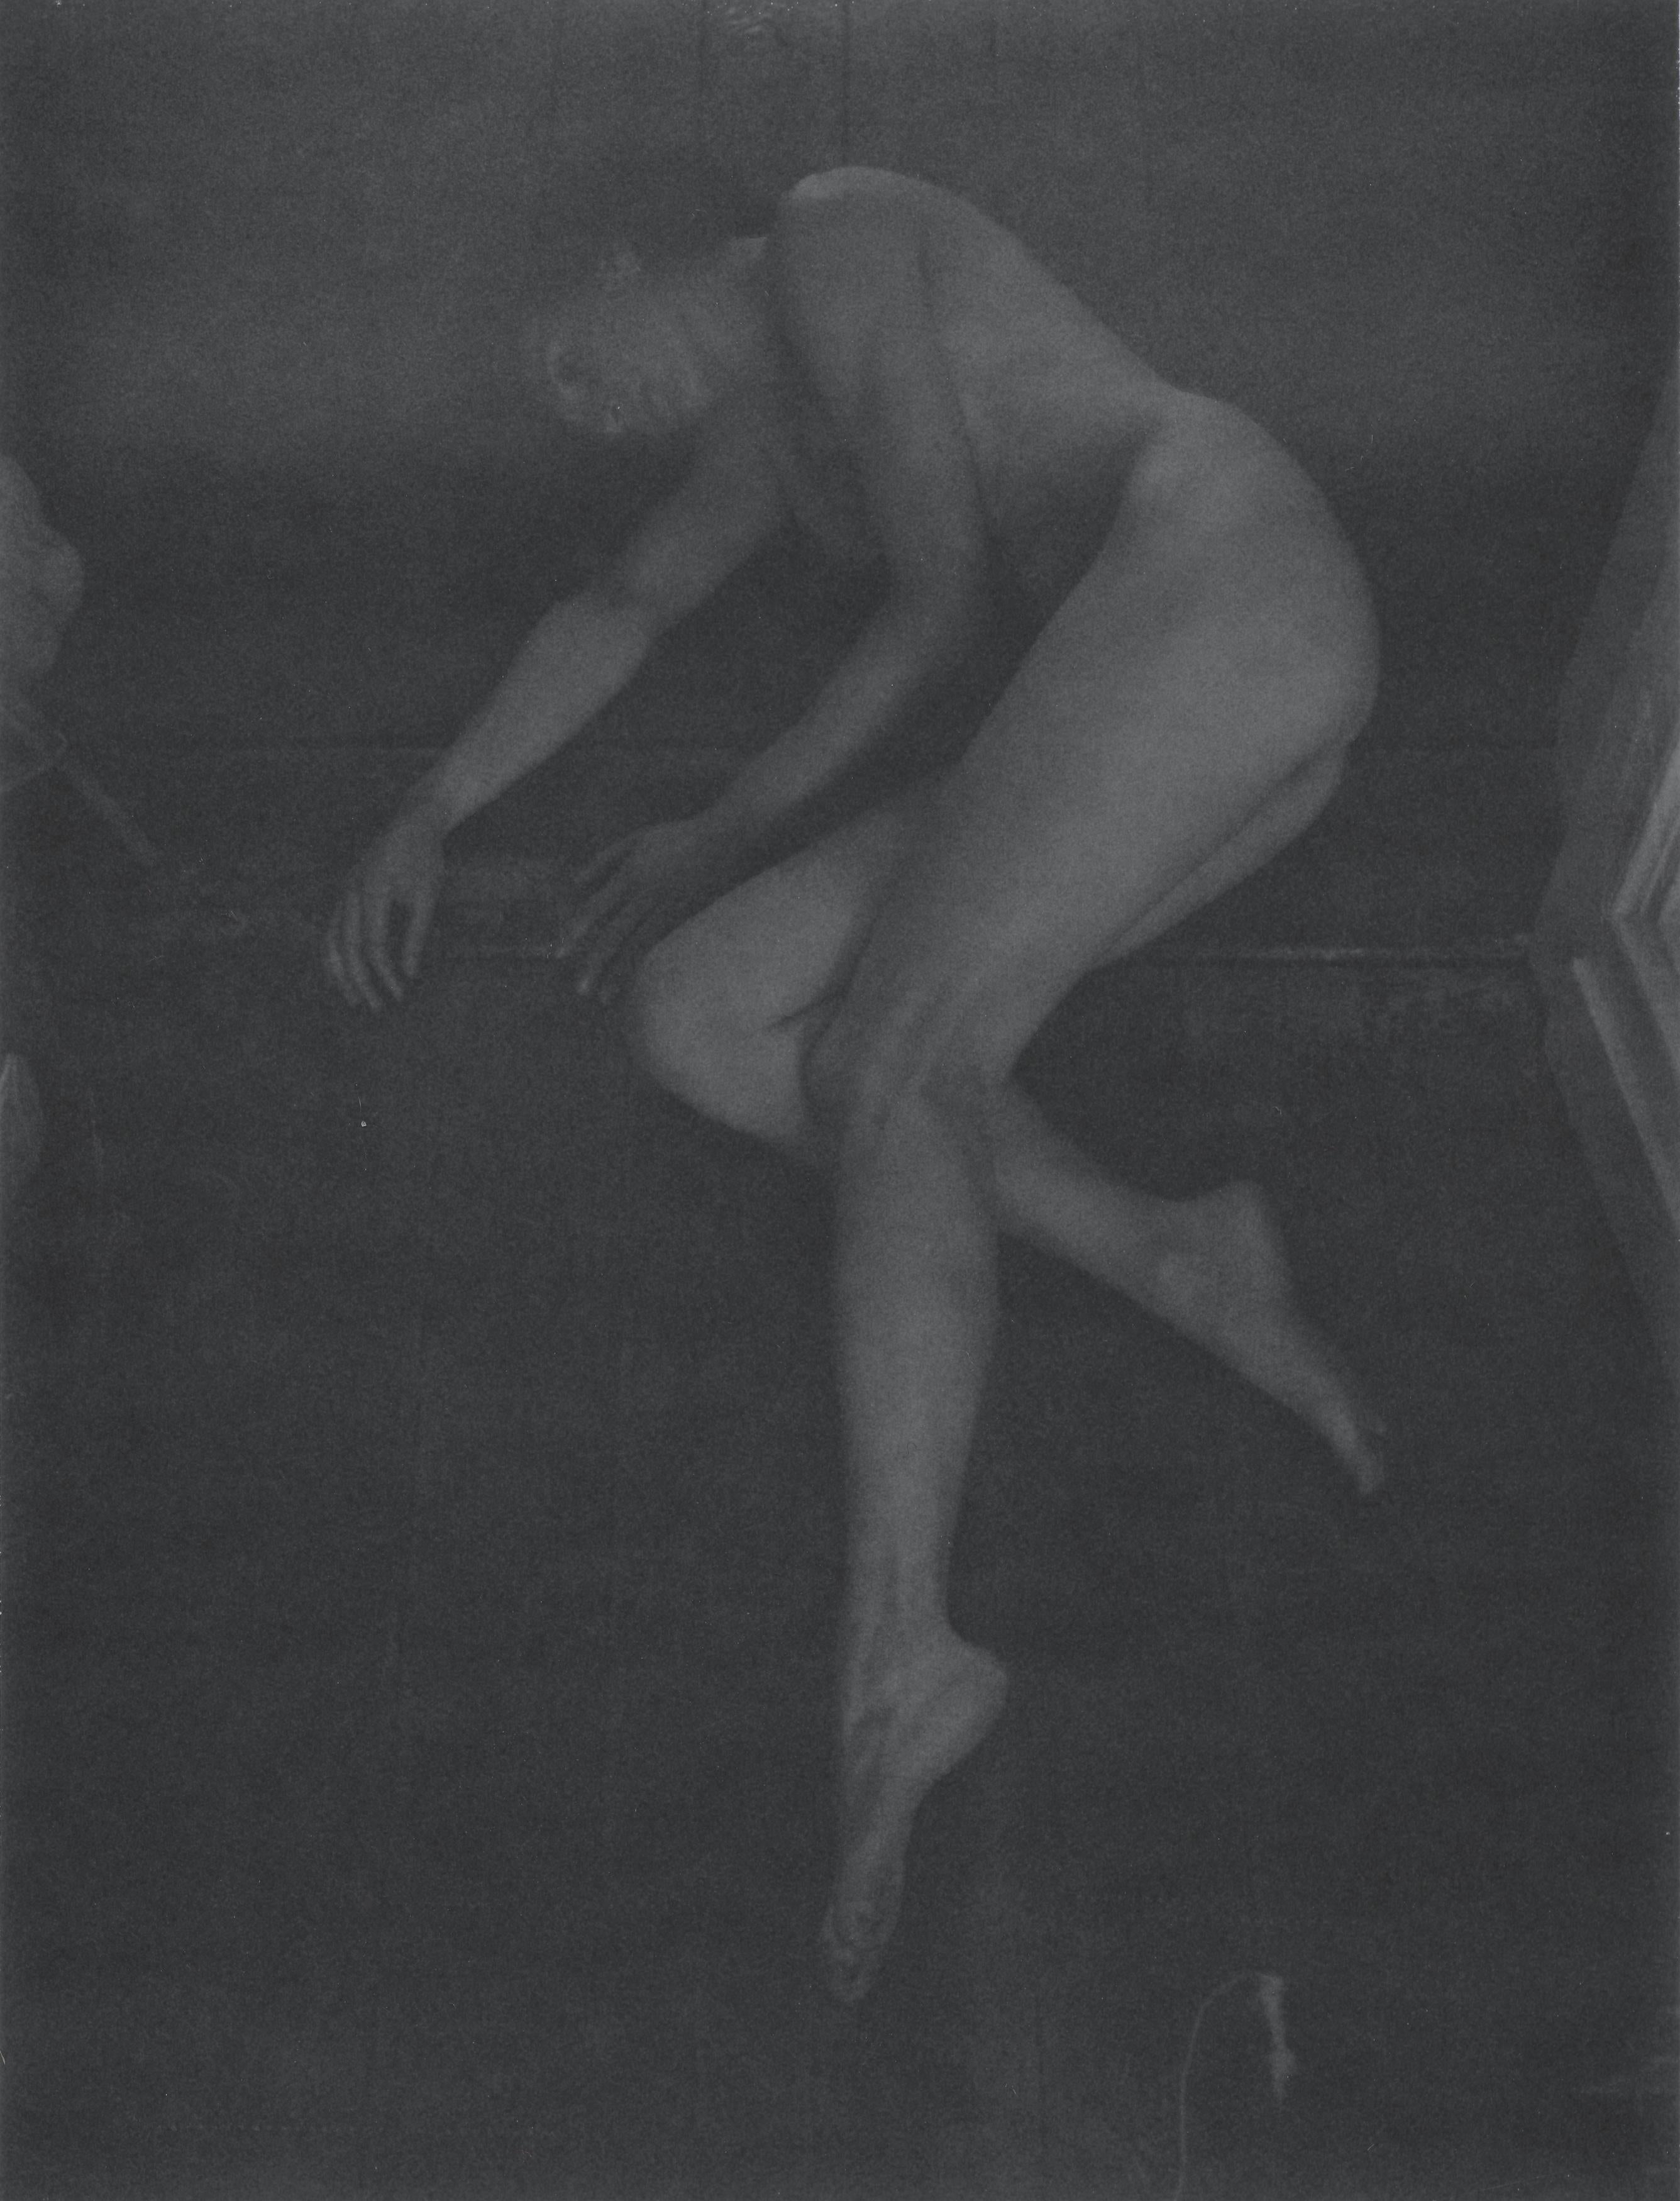 Kirsten Thys van den Audenaerde Nude Photograph - Figment - Contemporary, Nude, Women, Polaroid, 21st Century